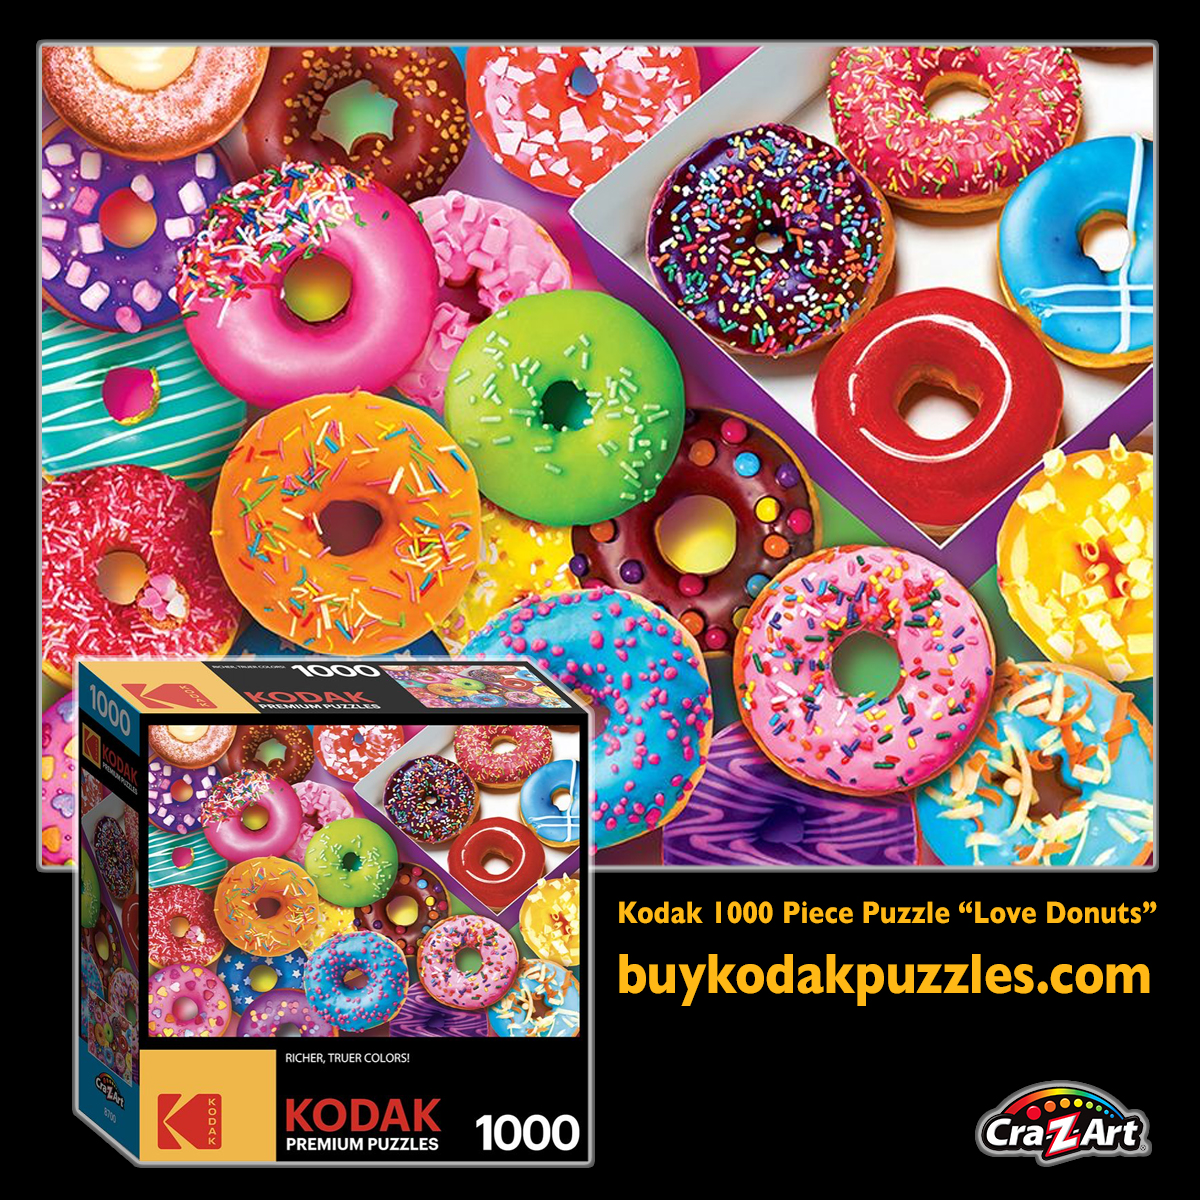 Kodak Premium Puzzles I Love Donuts Crazart 1000 Pieces Puzzle 